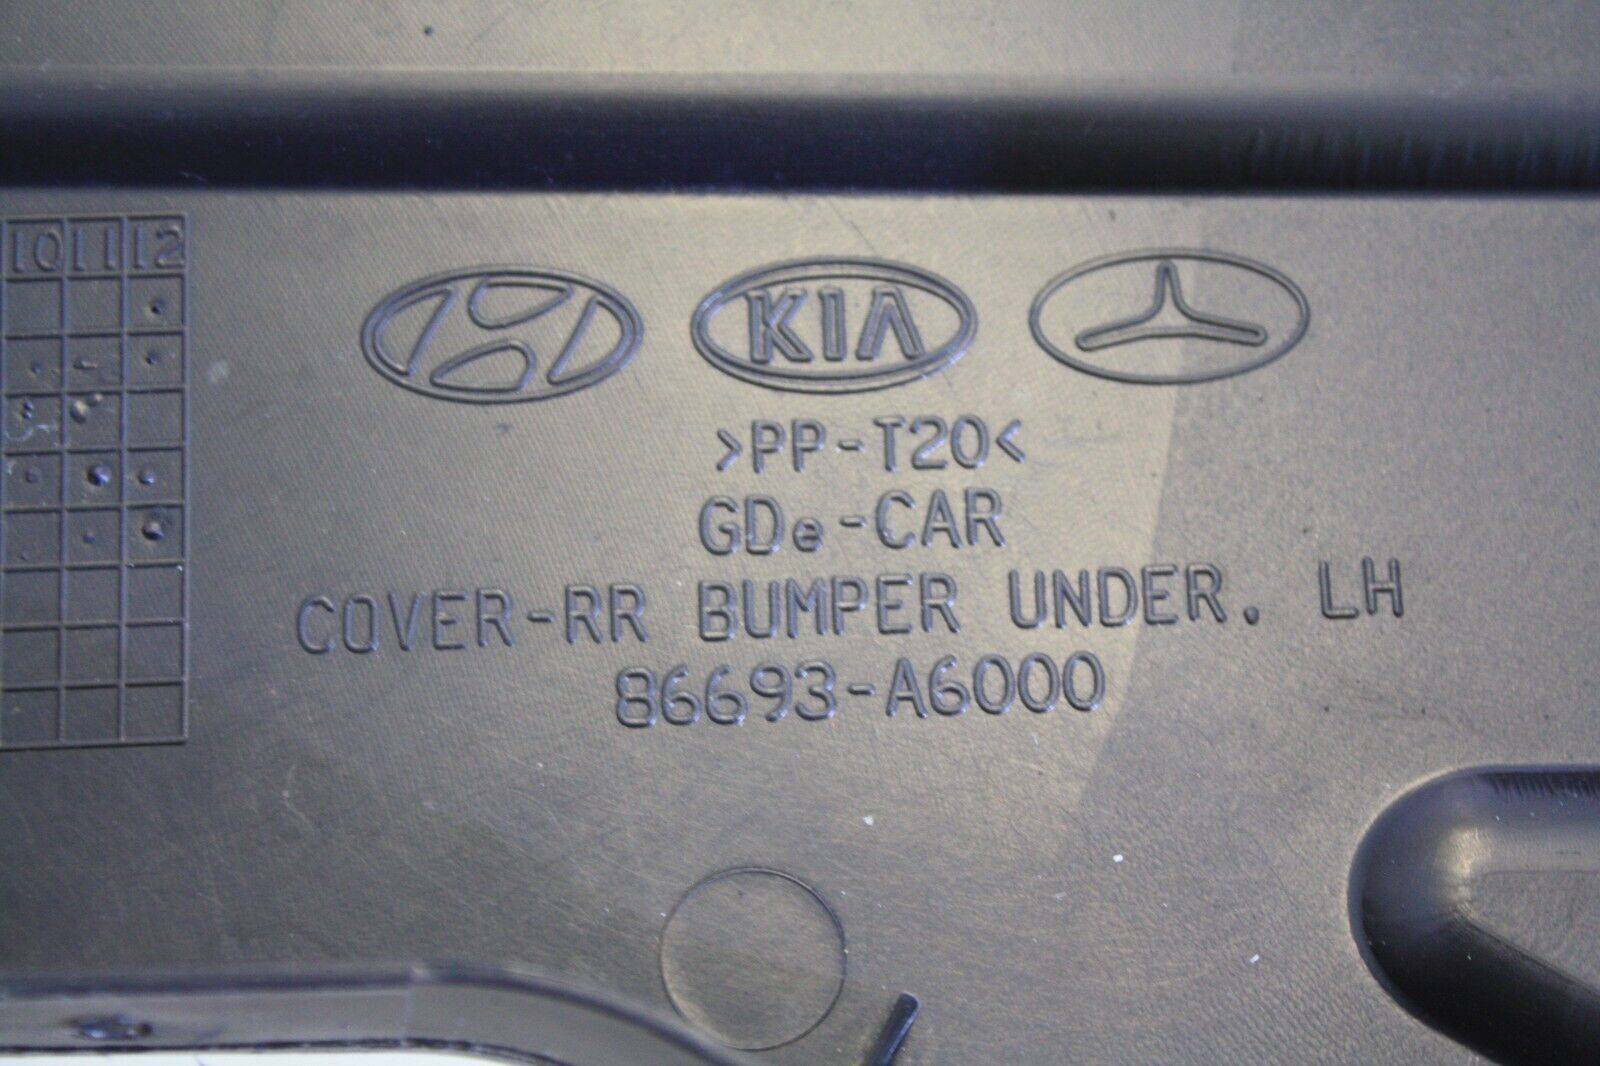 Hyundai-i30-Rear-Bumper-Left-Under-Tray-2012-to-2015-86693-A6000-Genuine-176045580558-8